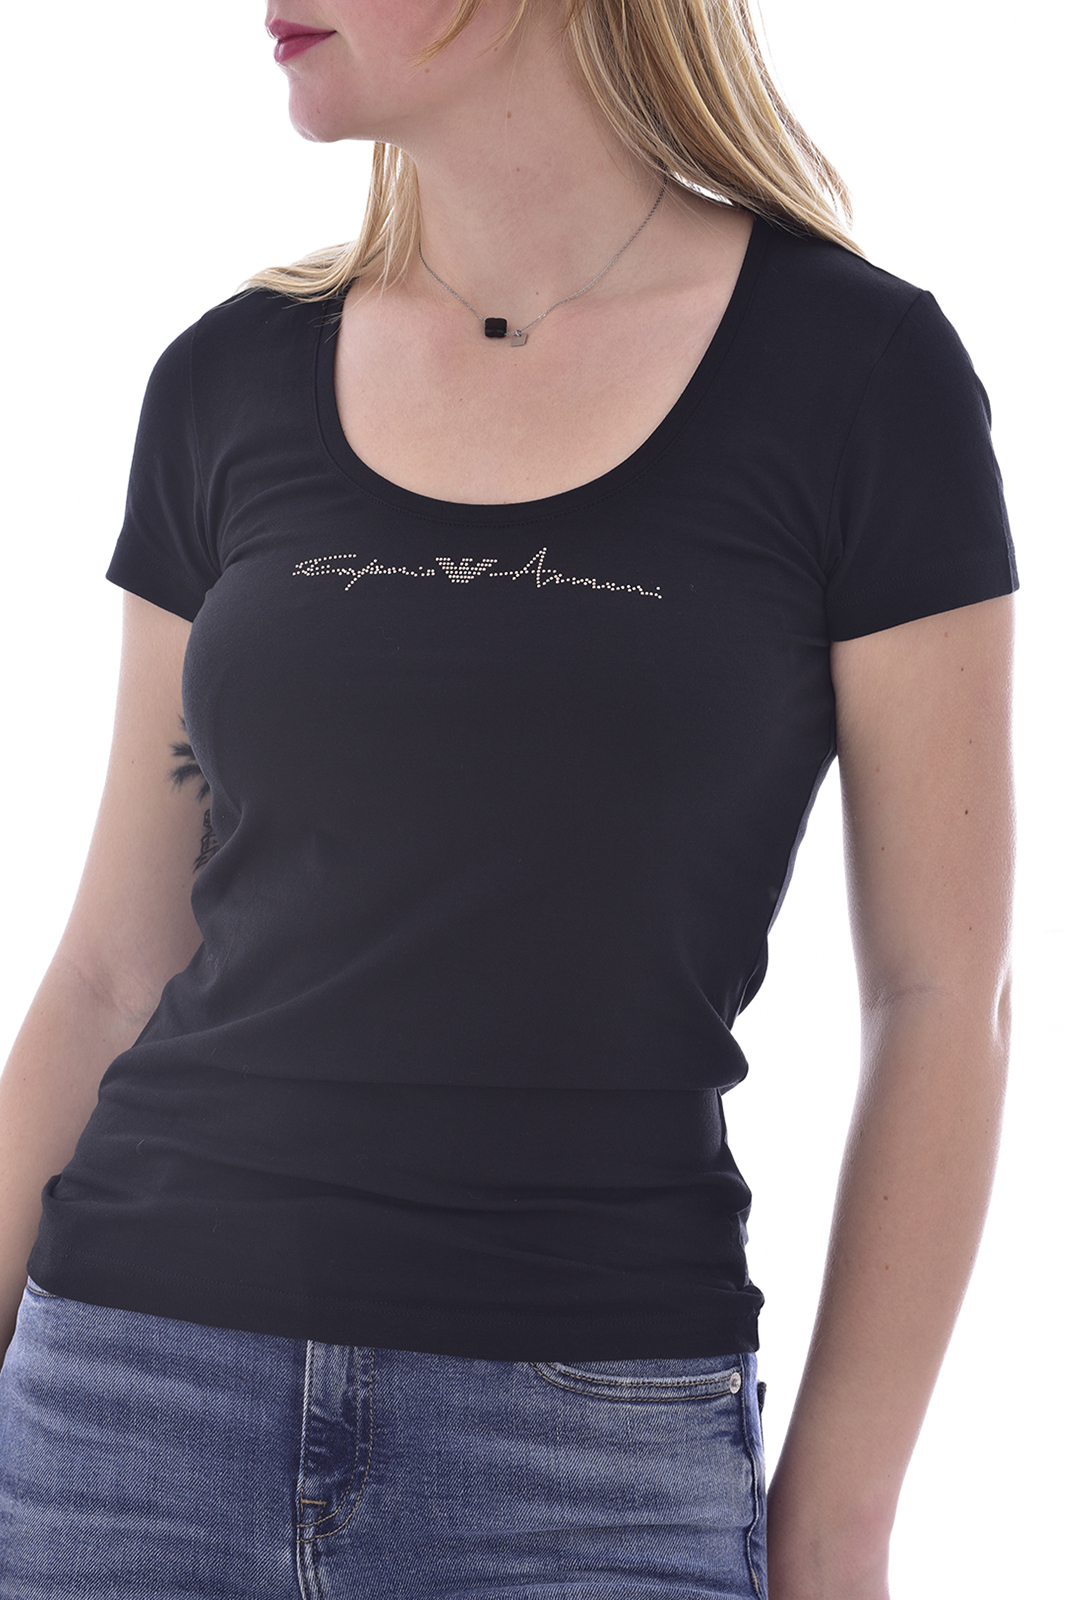 Tee-shirt noir à manches courtes Emporio Armani - 163377 1P223